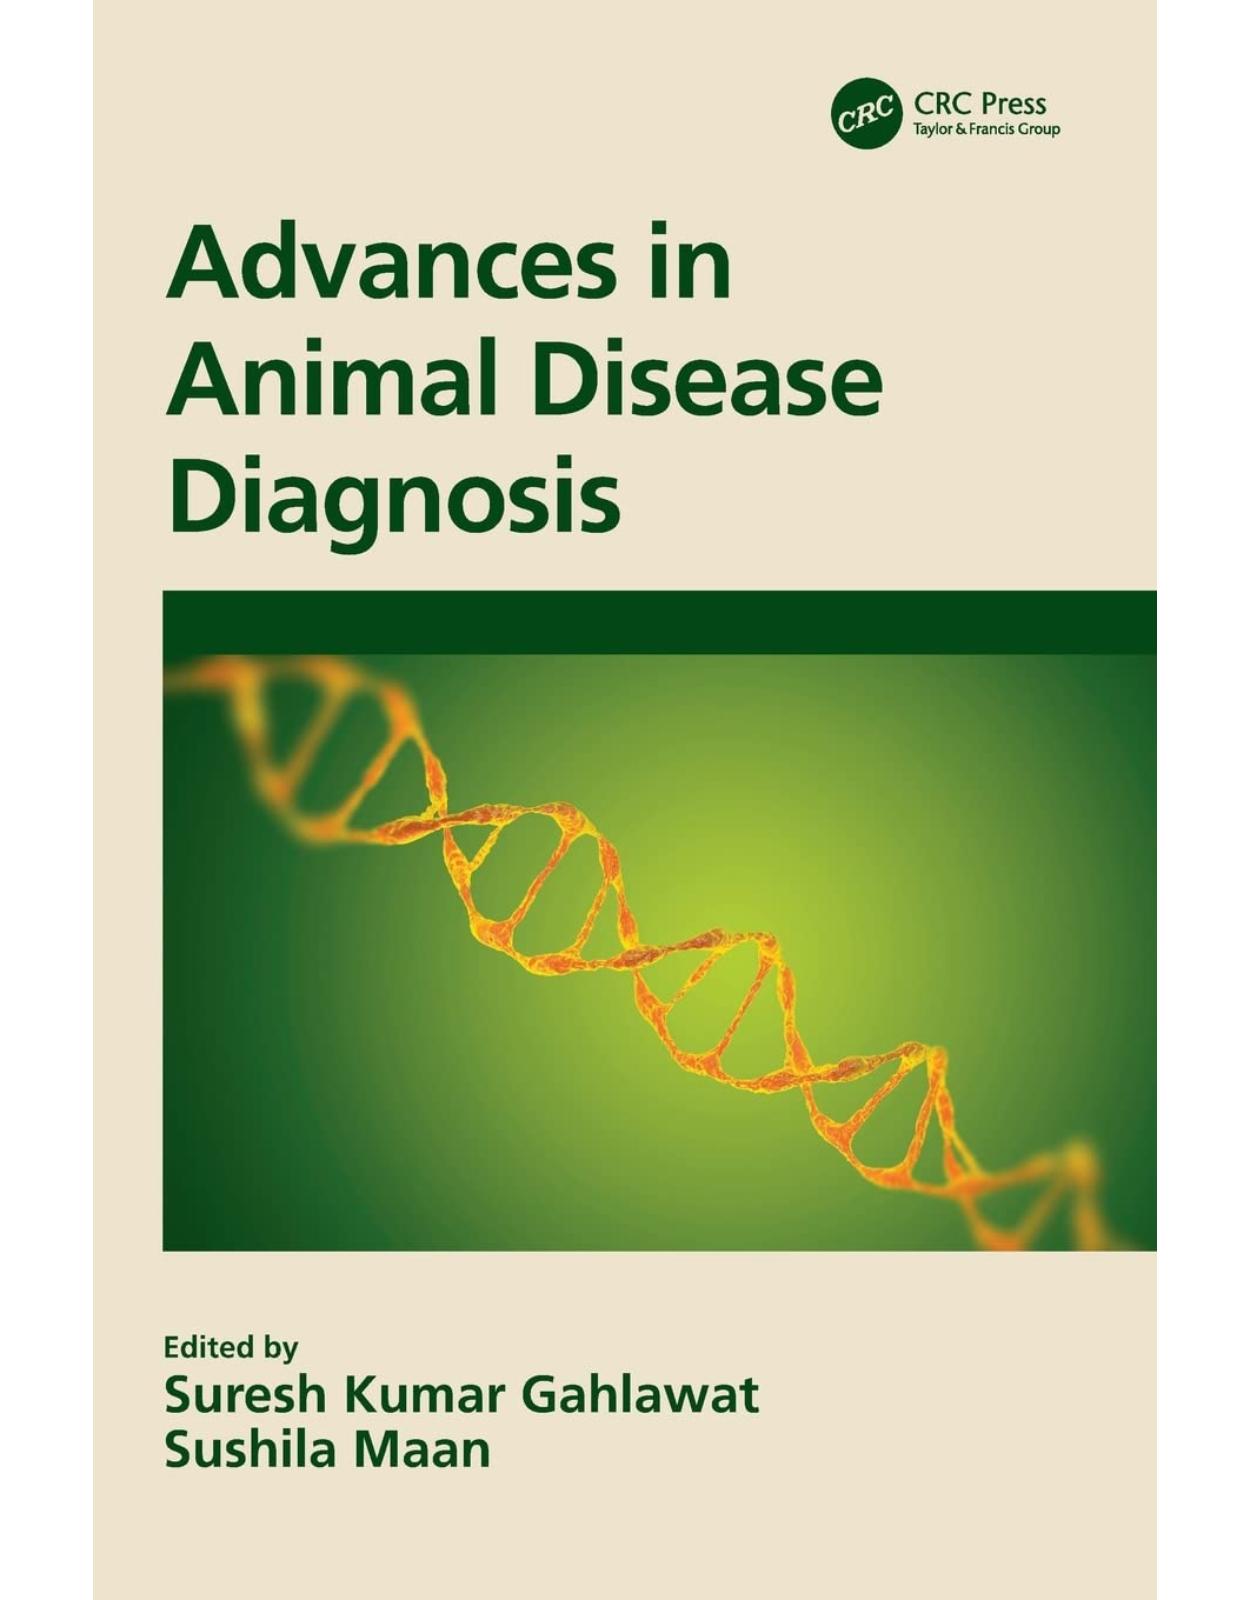 Advances in Animal Disease Diagnosis